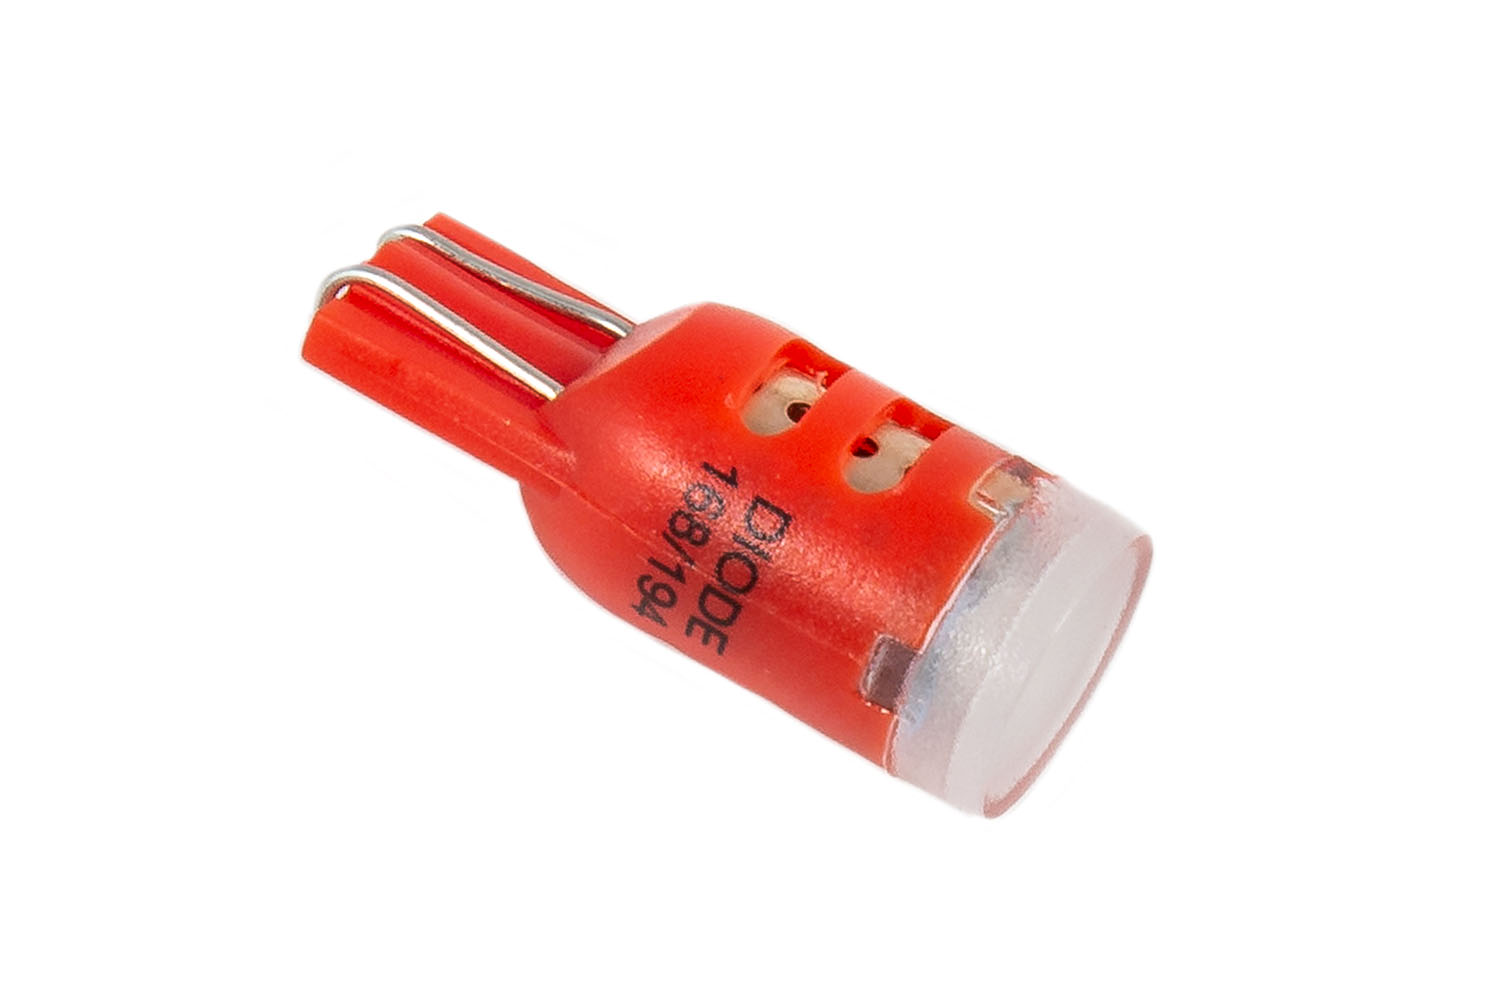 194 LED Bulb HP5 LED Red Single Diode Dynamics